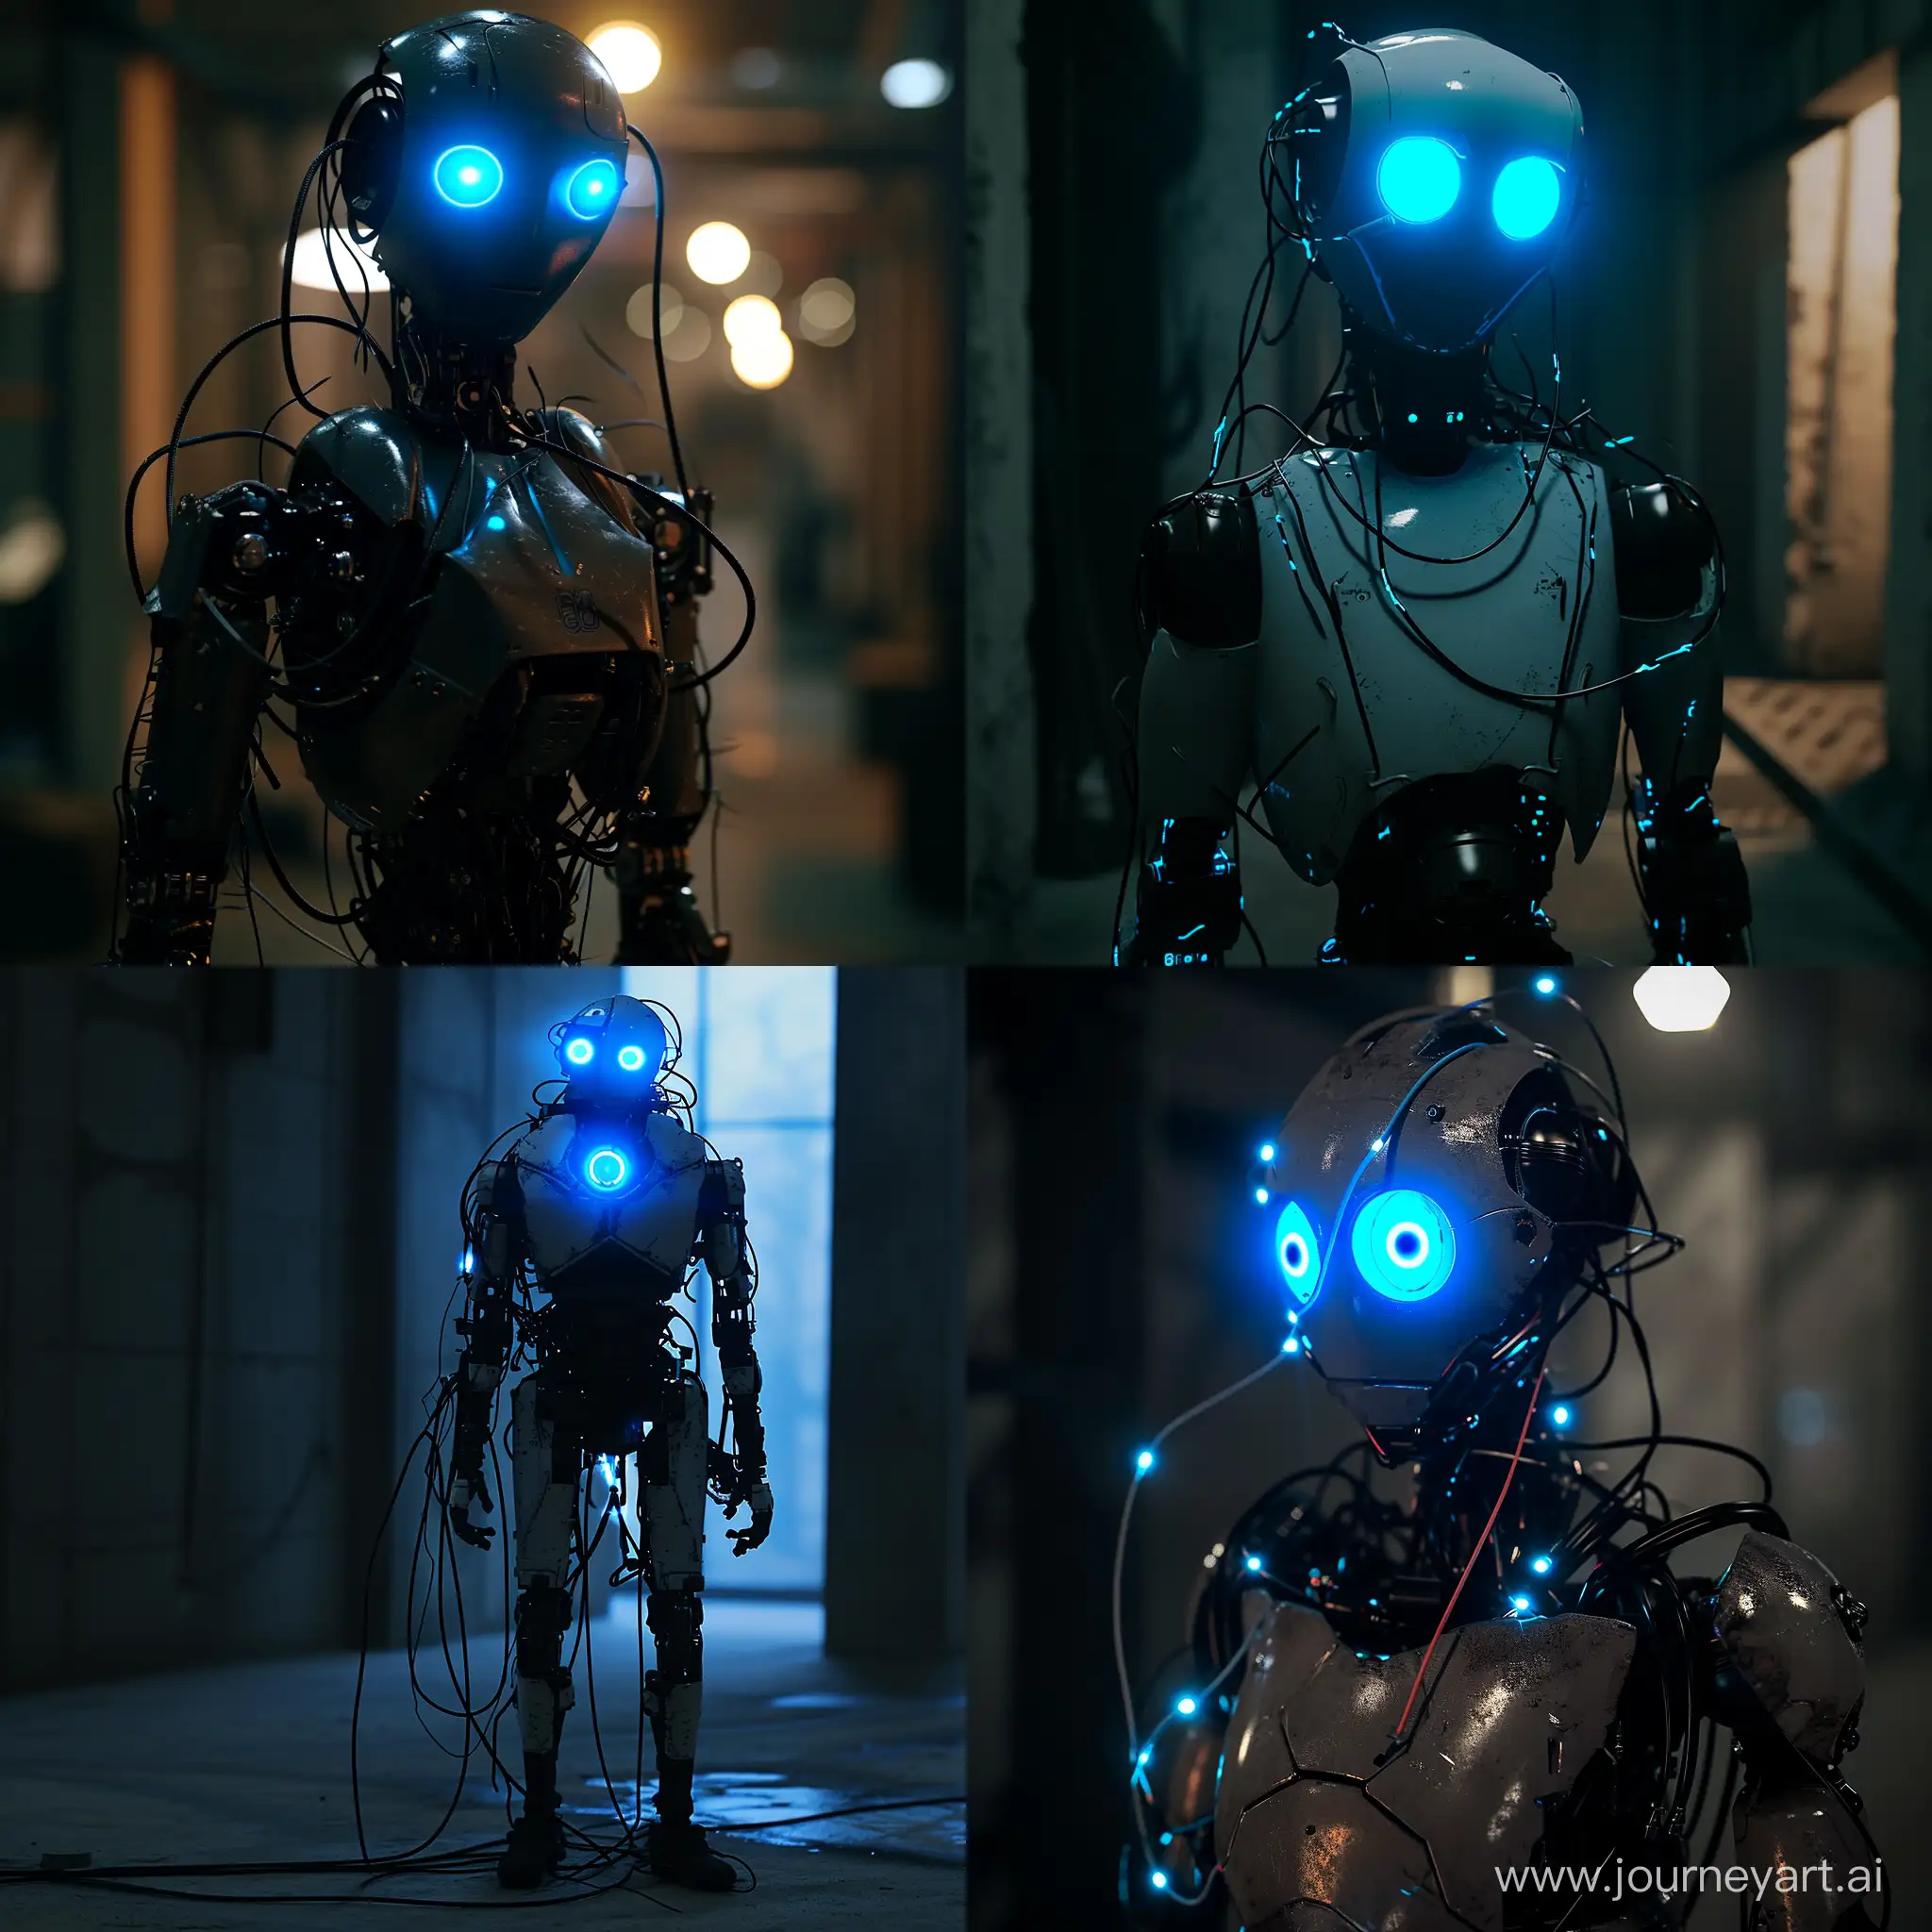 Glowing-BlueEyed-Robot-in-a-Dark-Room-8K-HighResolution-Digital-Art